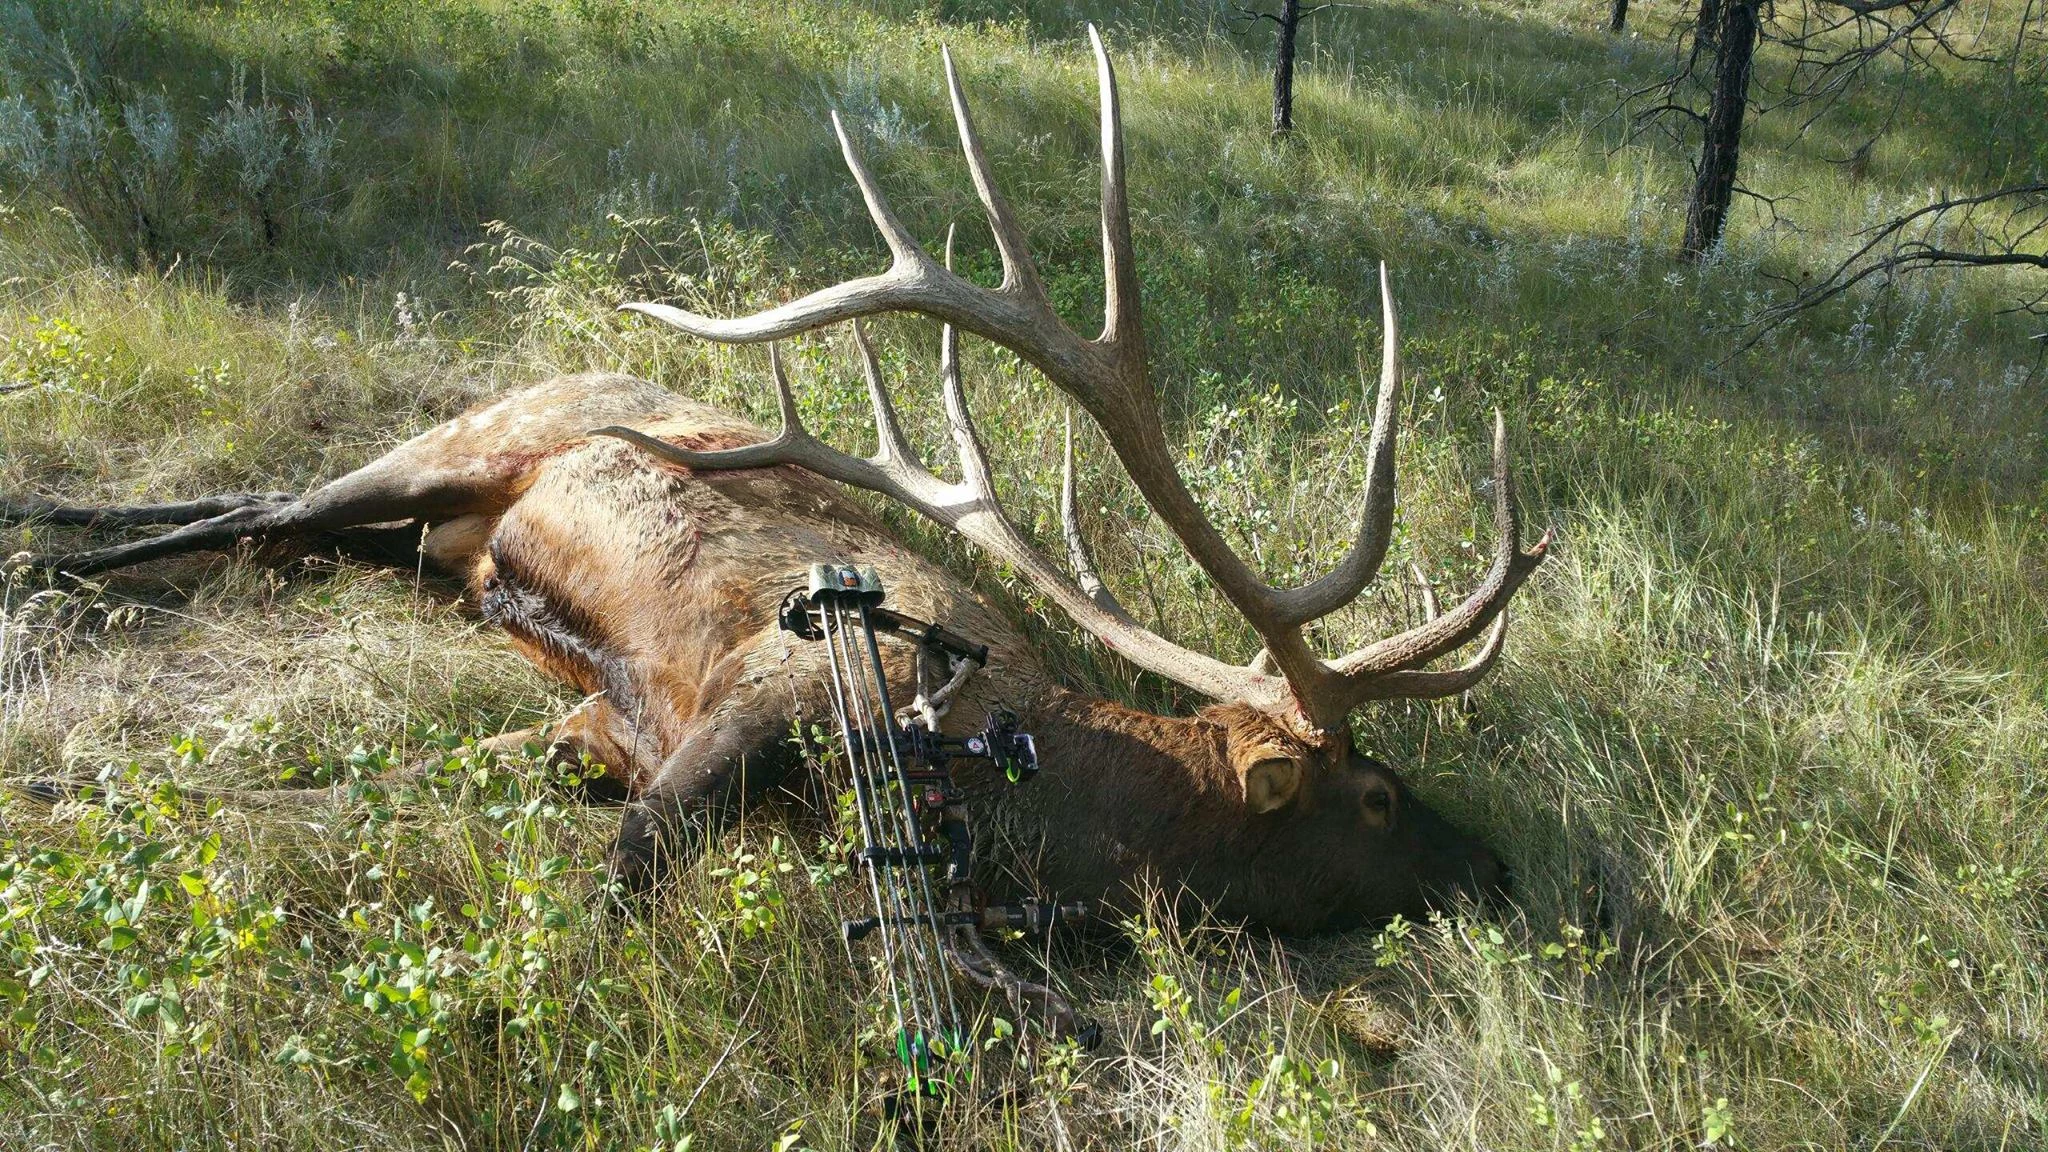 largest bull elk on record